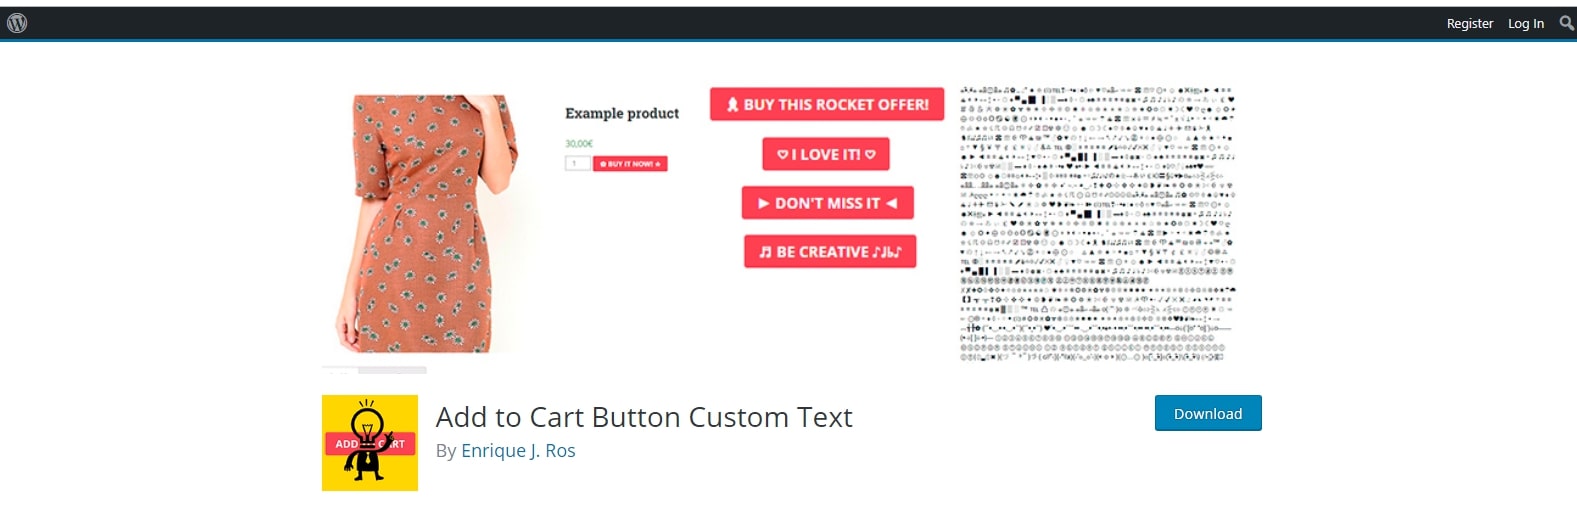 Add to Cart Button Custom Text 